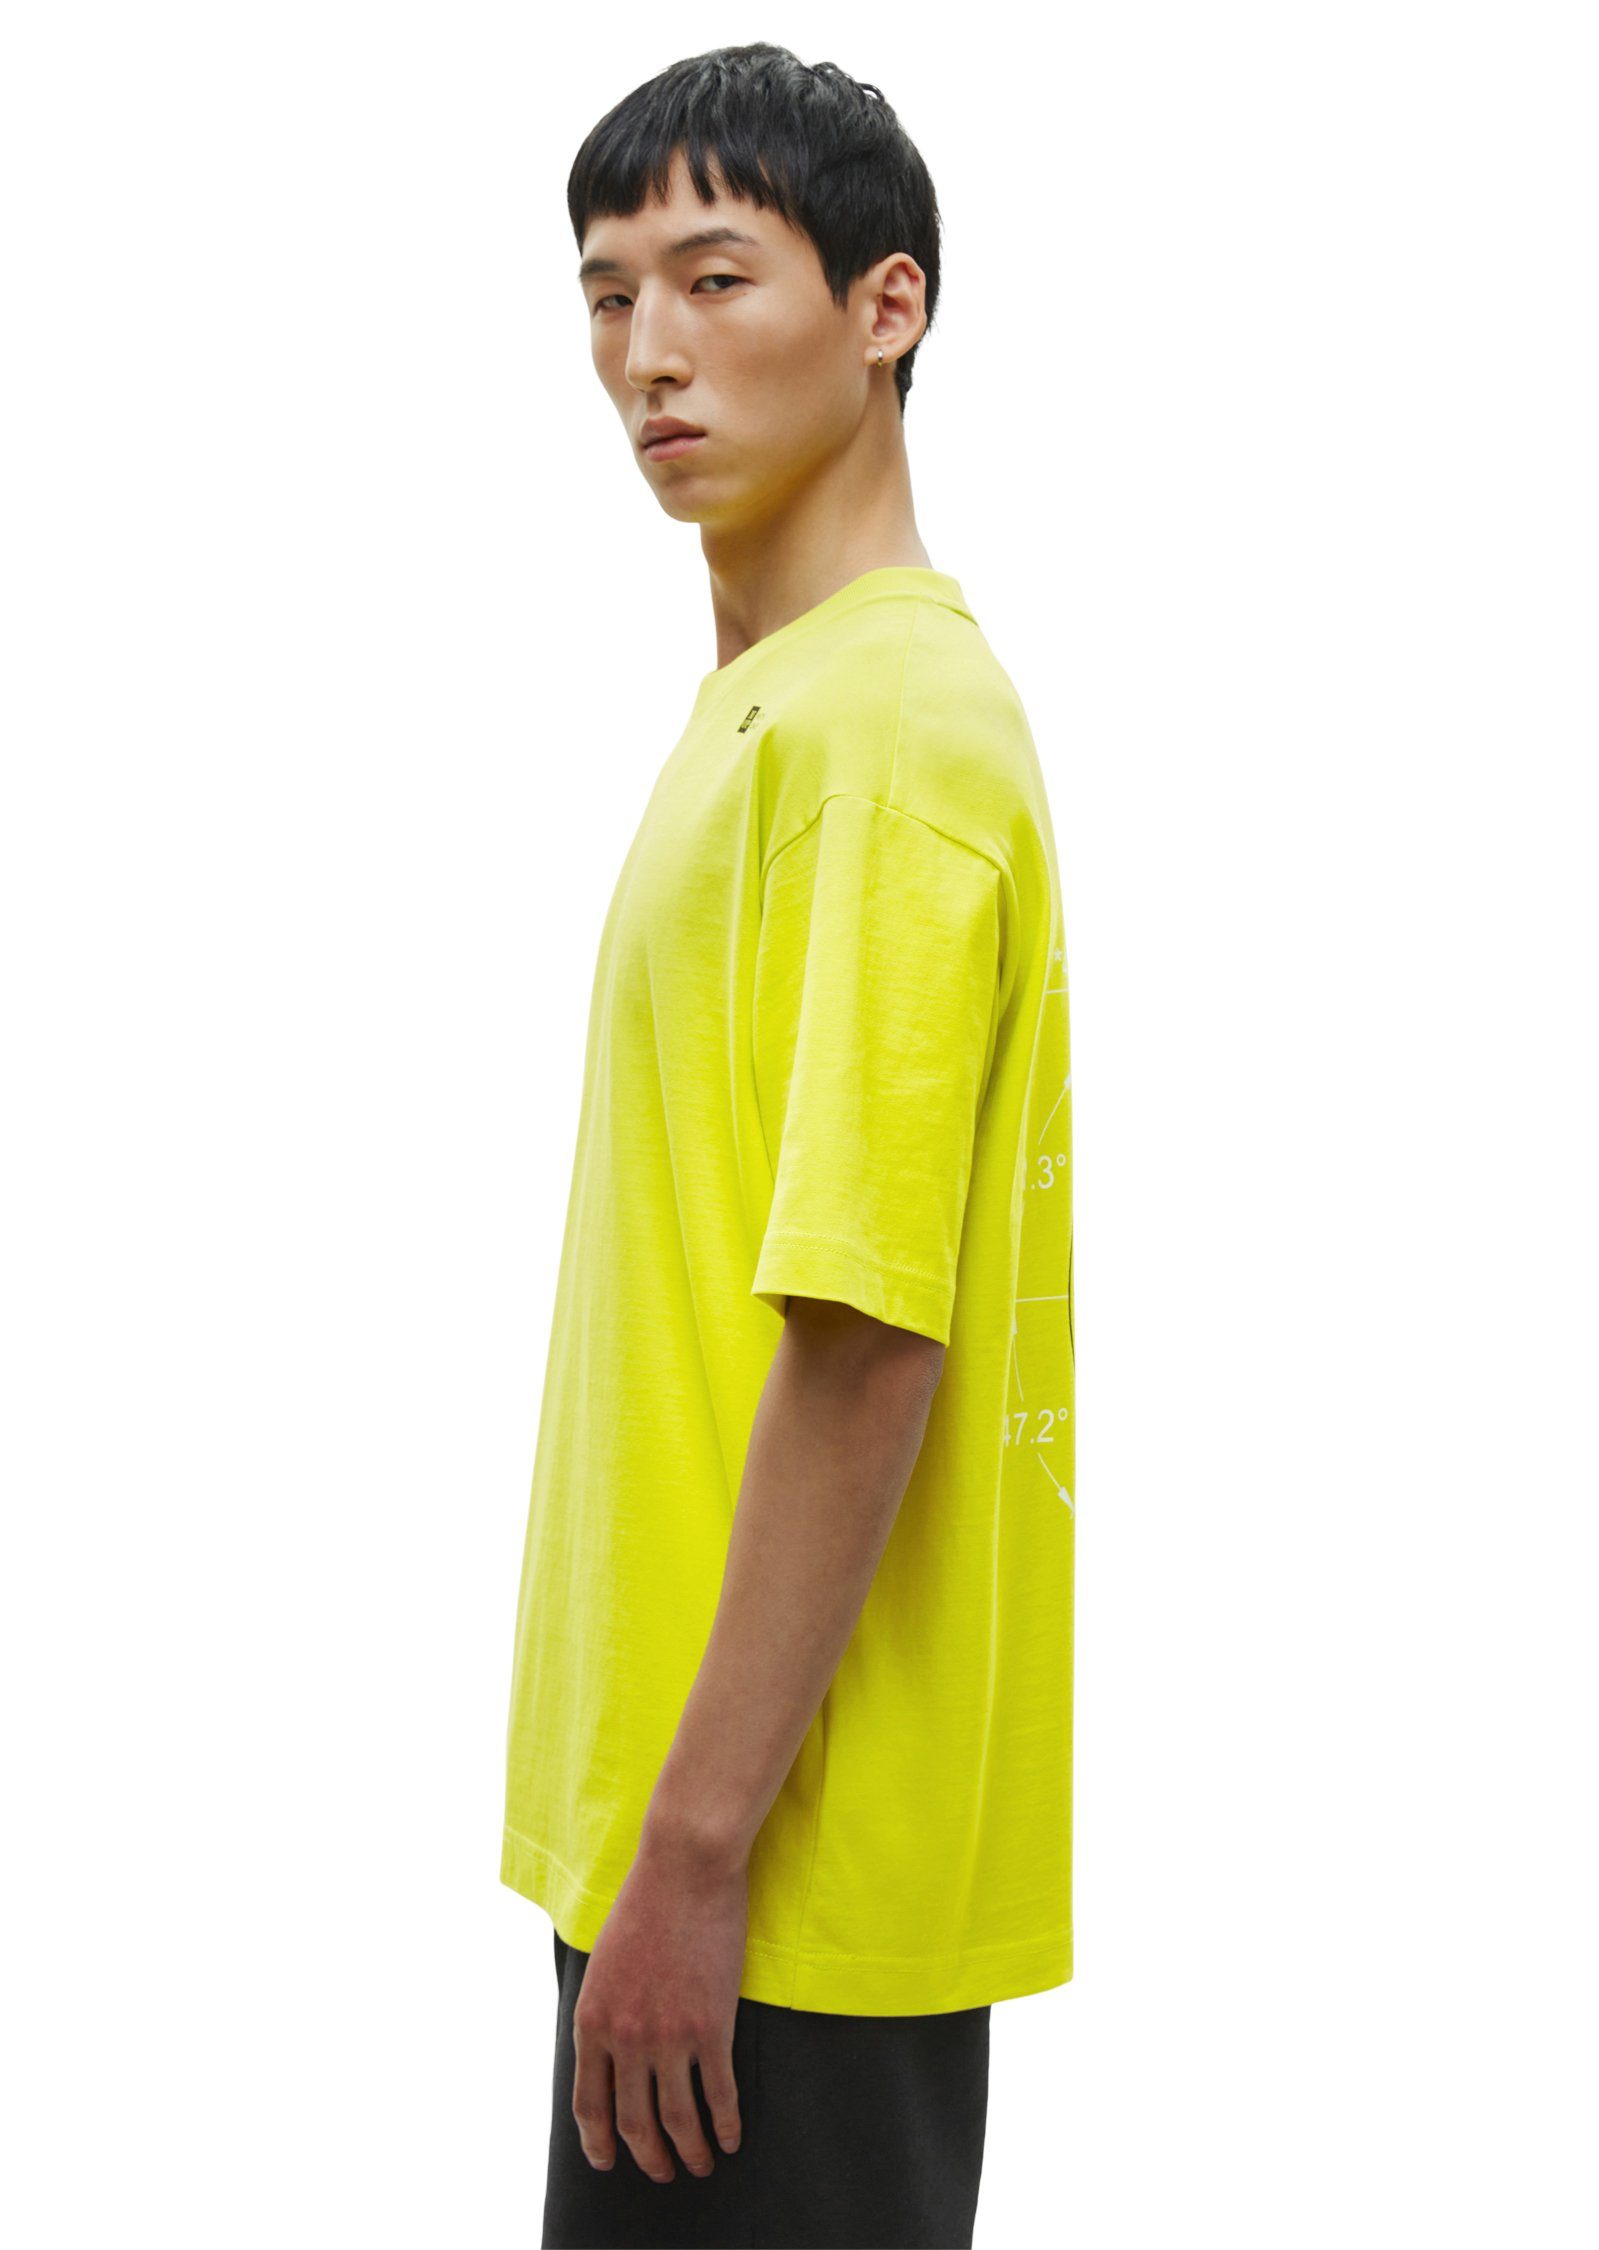 und gelb Rückenprint T-Shirt Logo O'Polo Marc mit